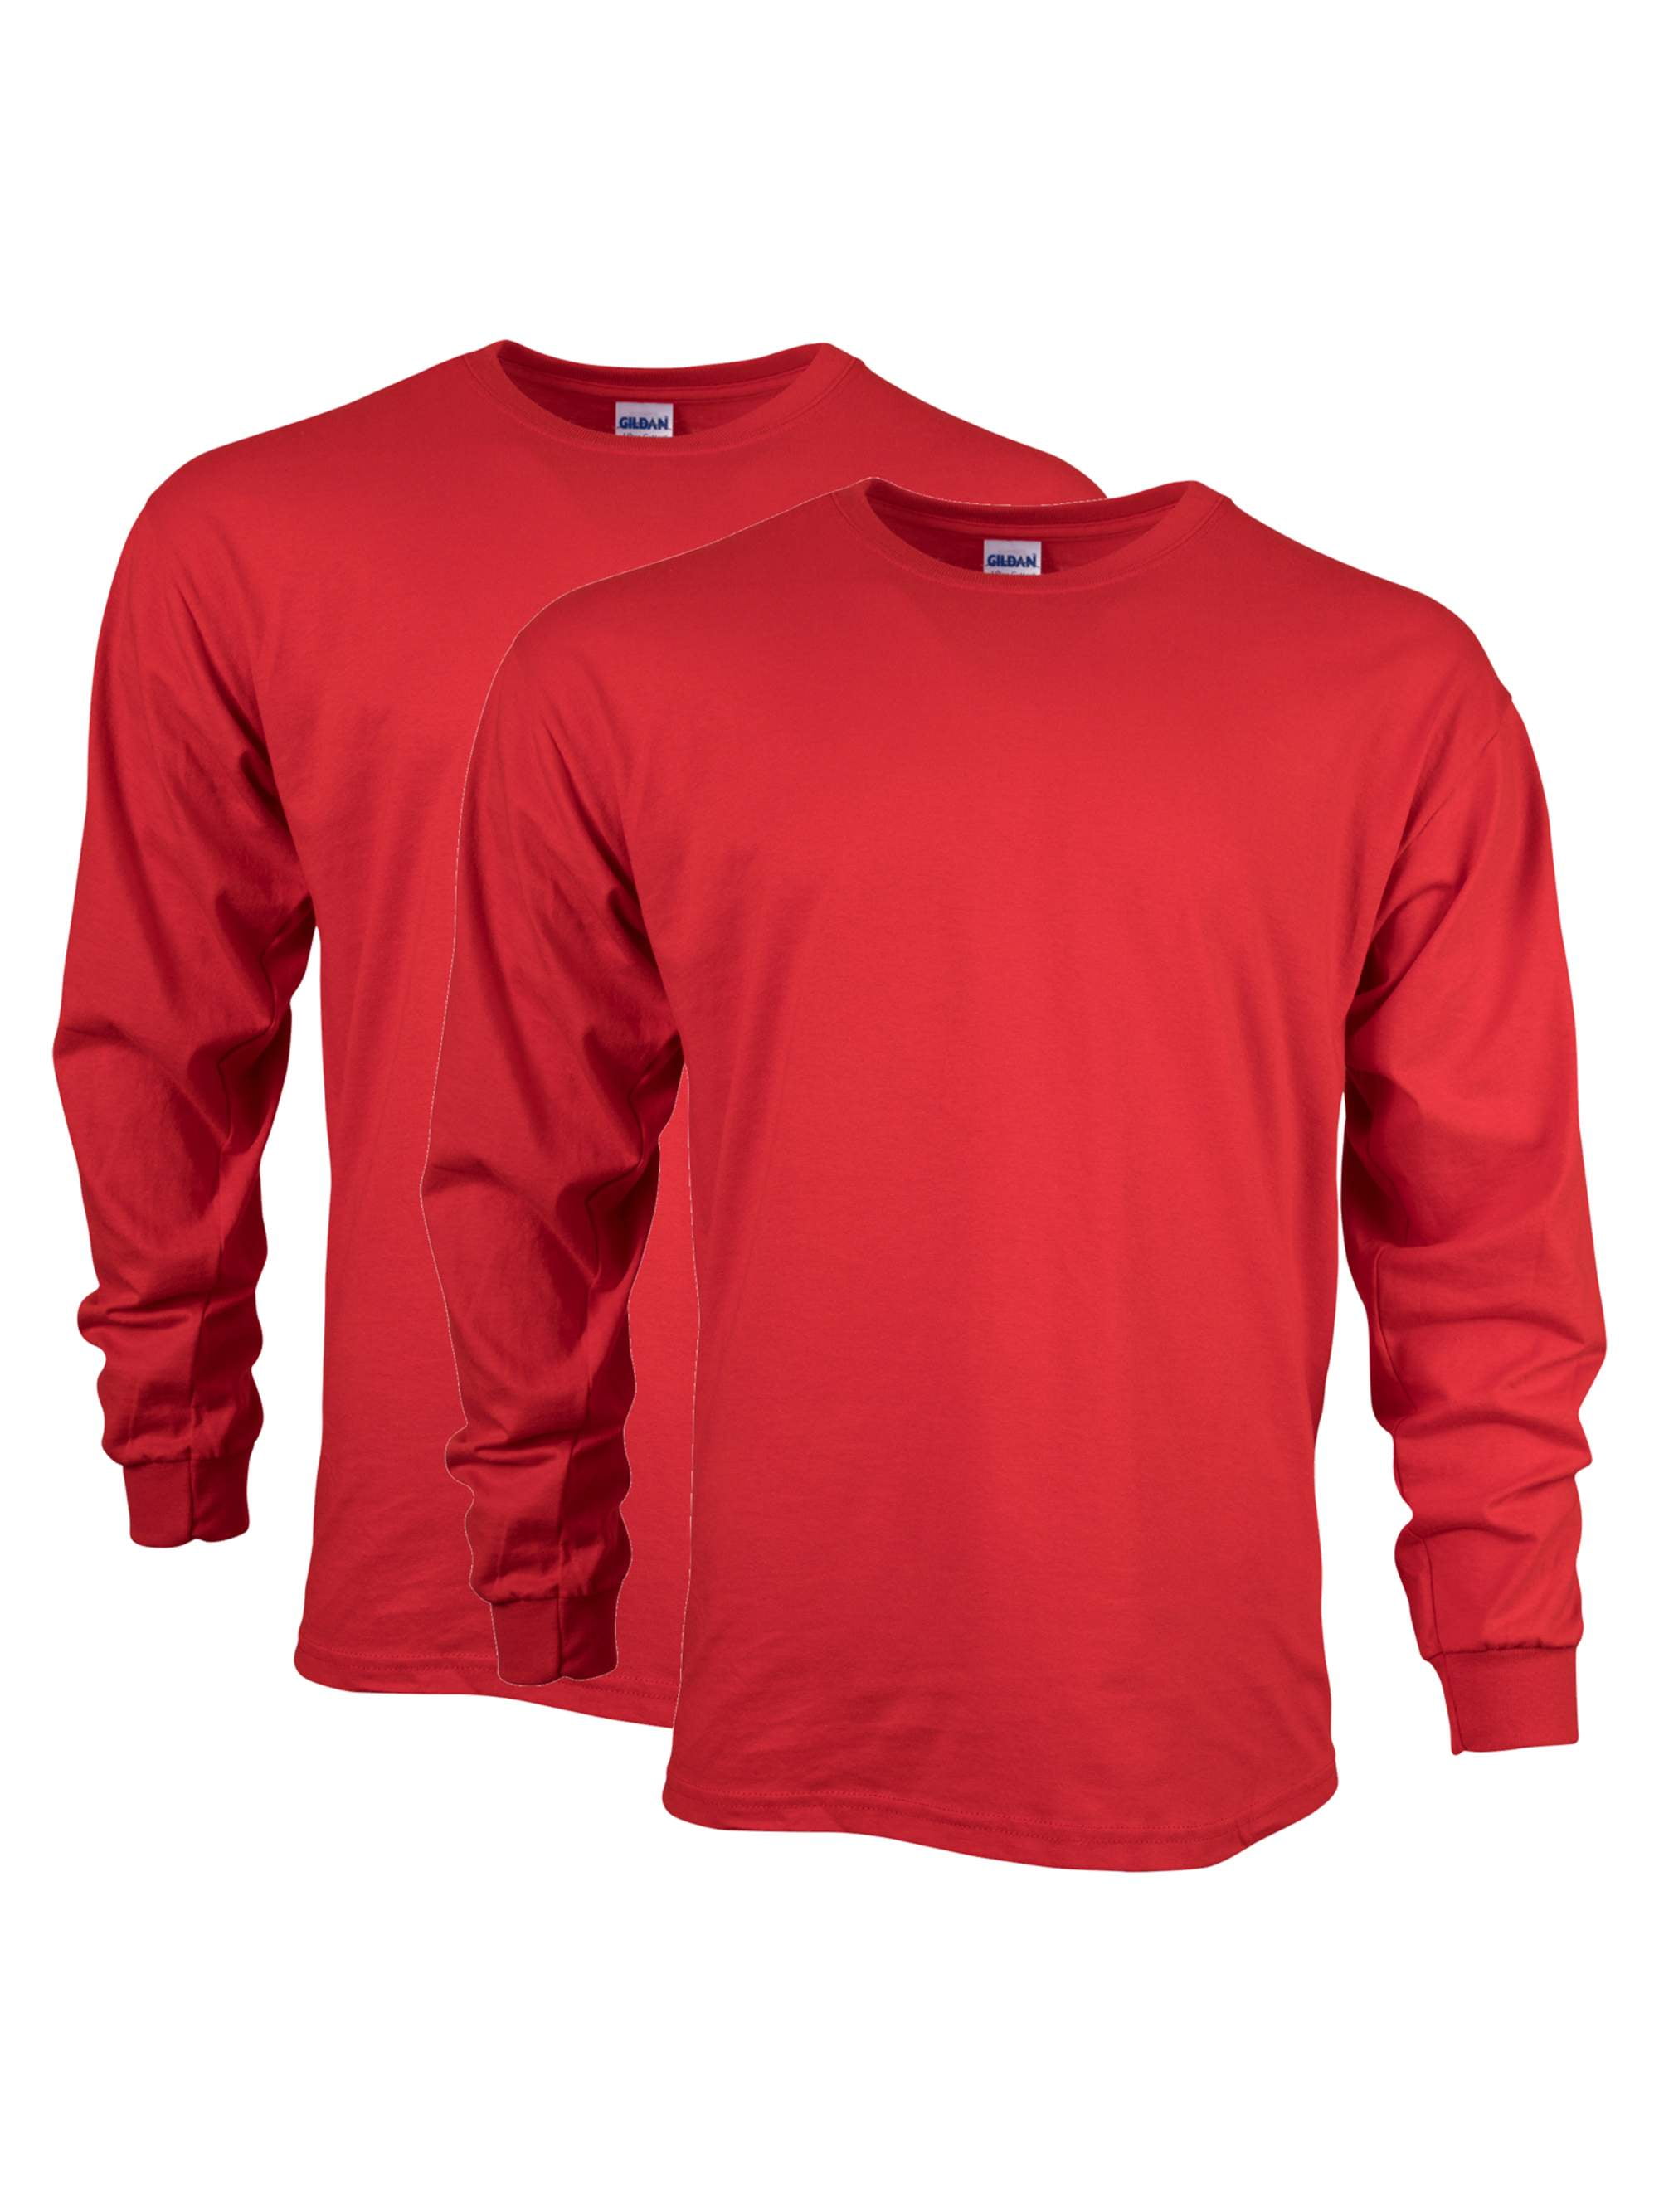 cotton red shirt